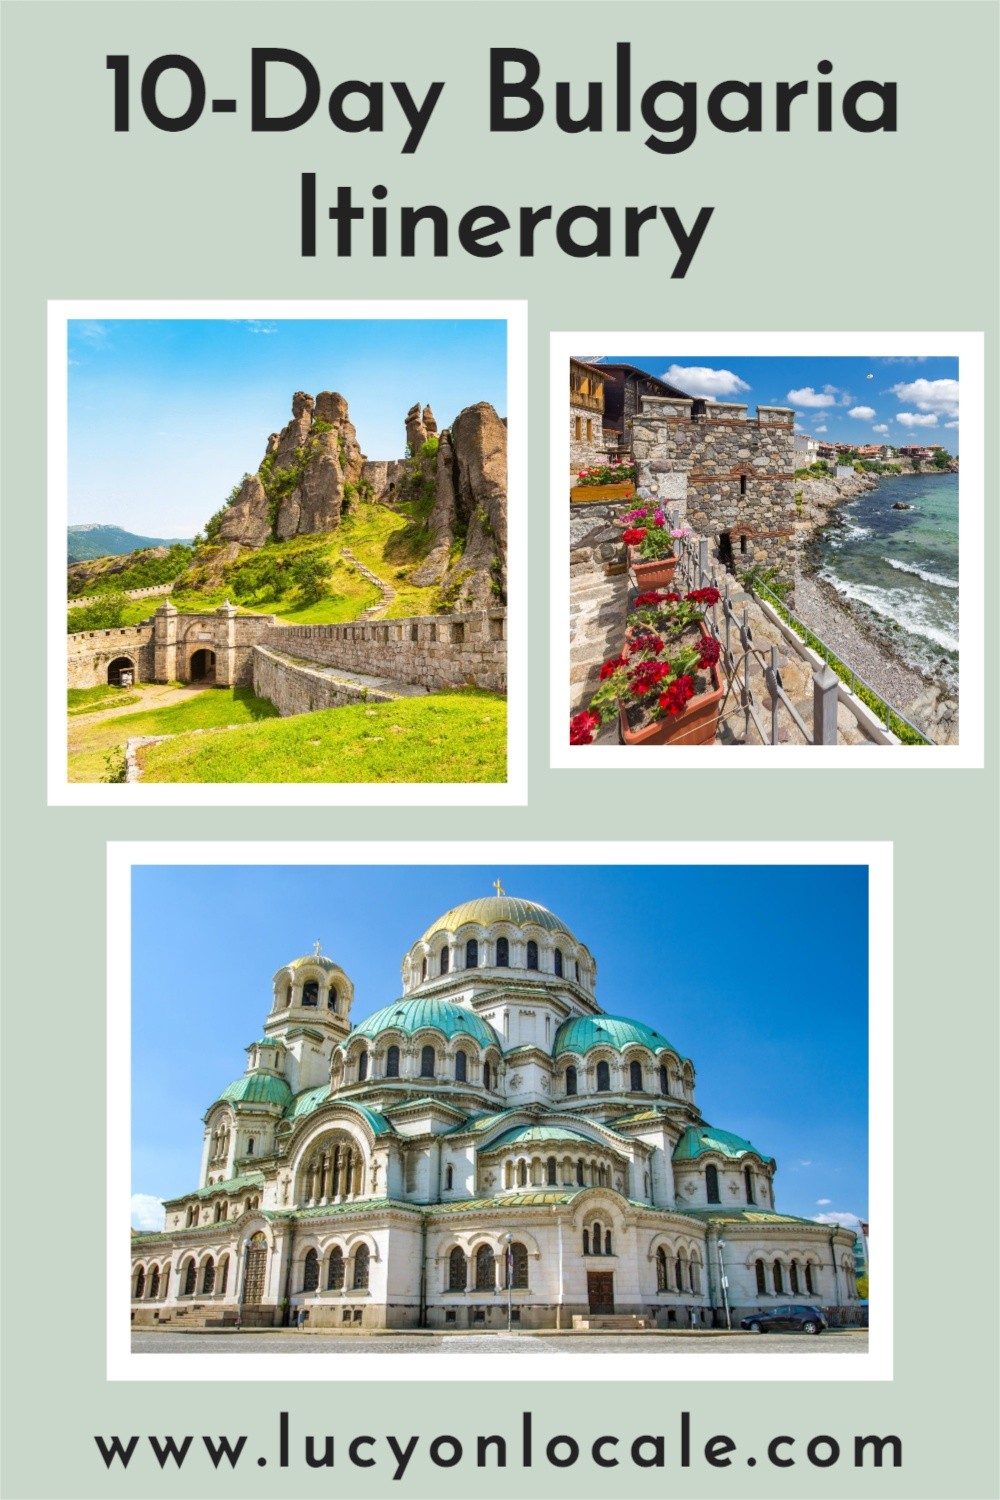 10-Day Bulgaria Itinerary